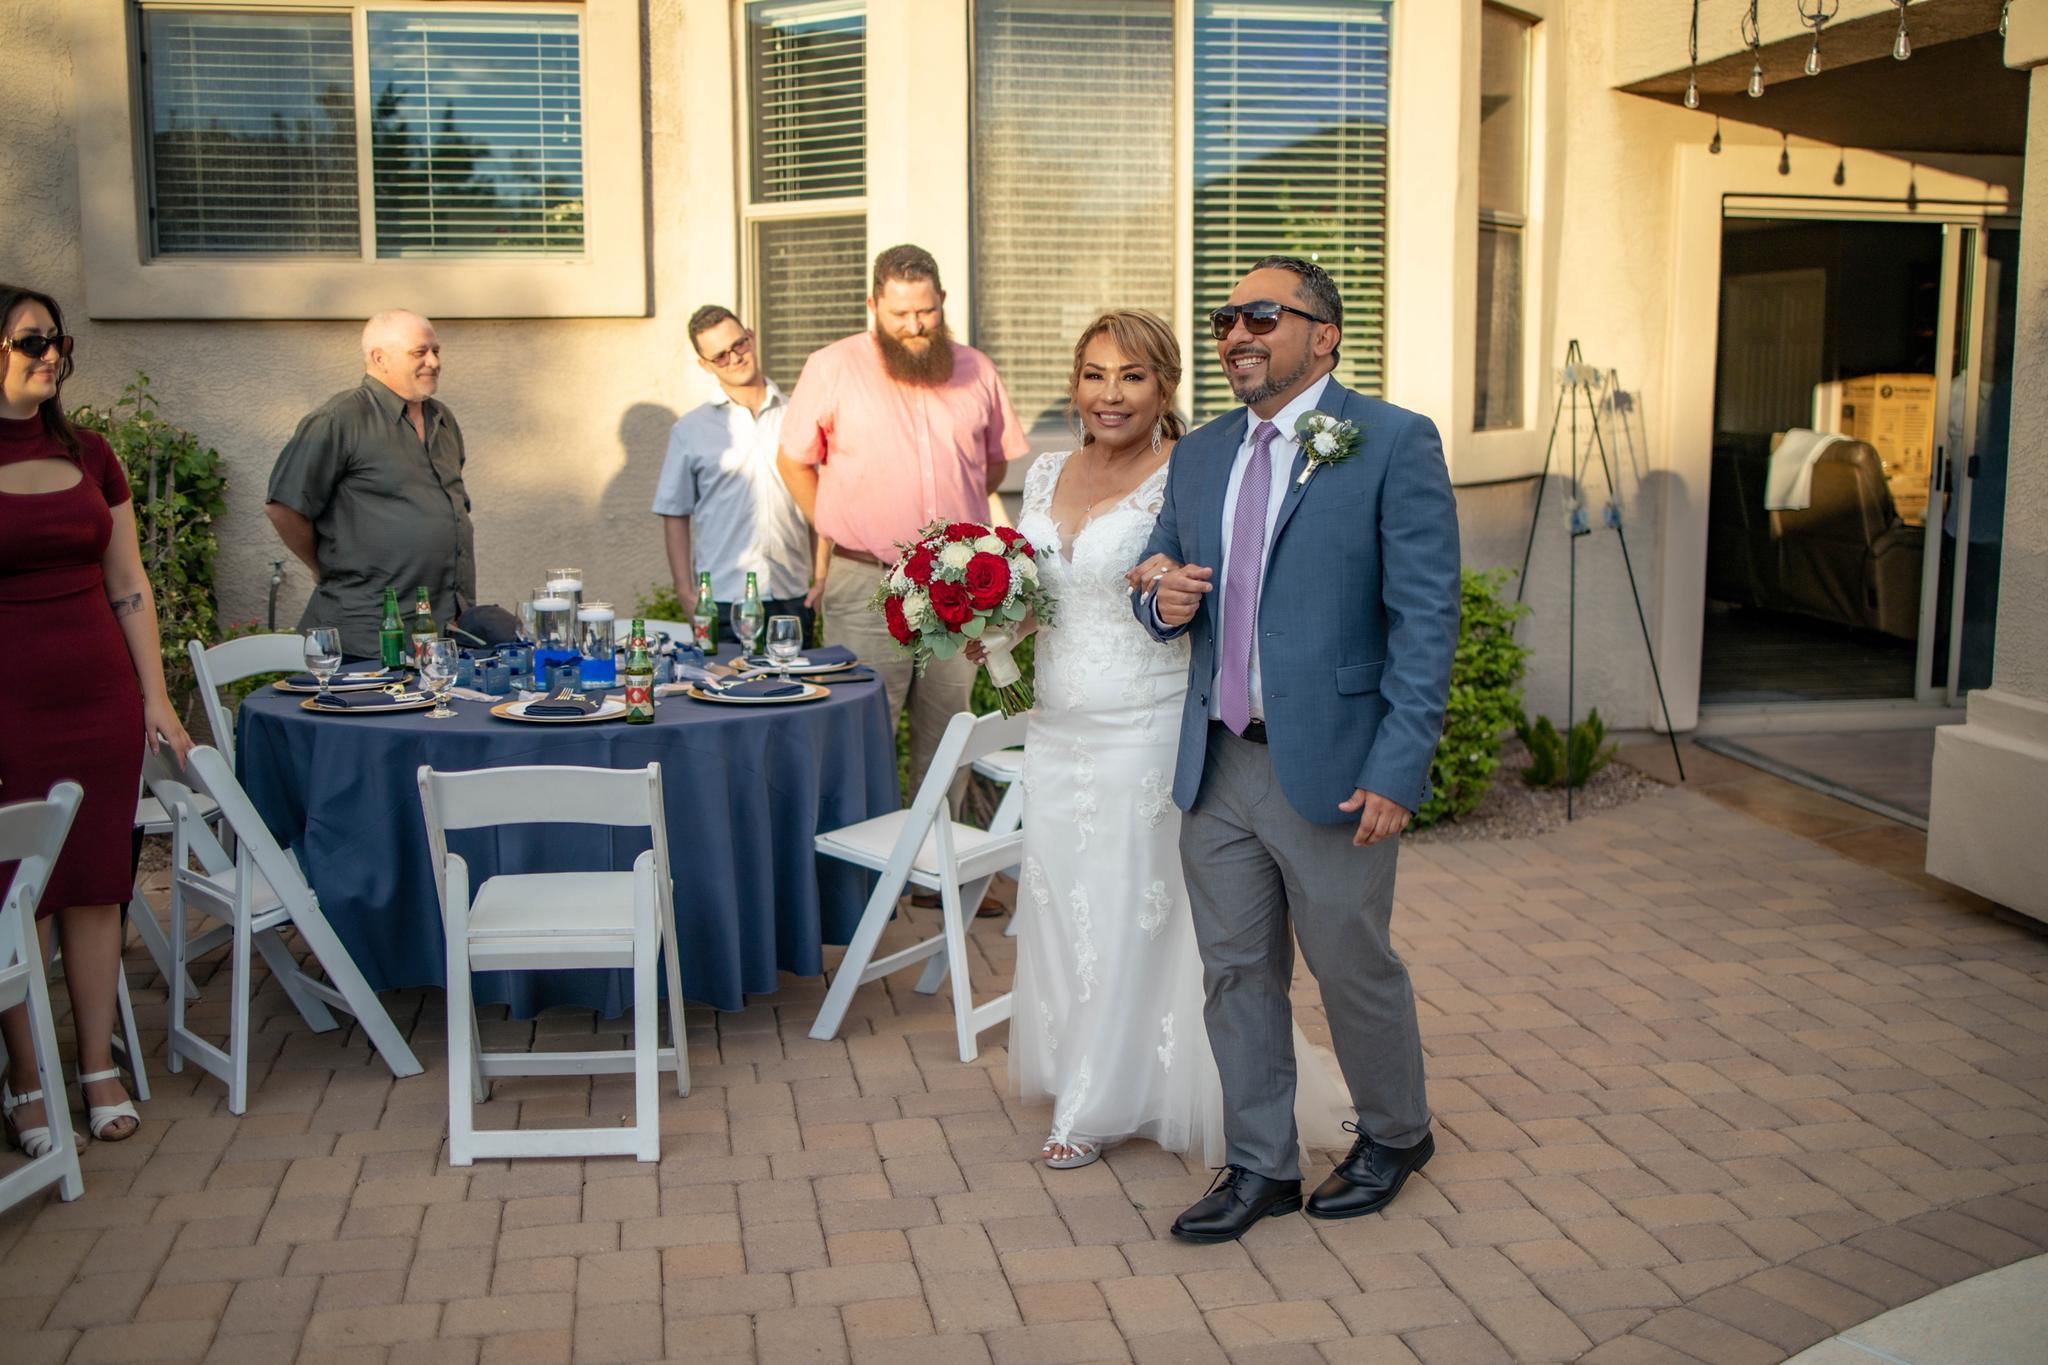 The Intimate Backyard Wedding of Jason and Mireya in Surprise, Arizona